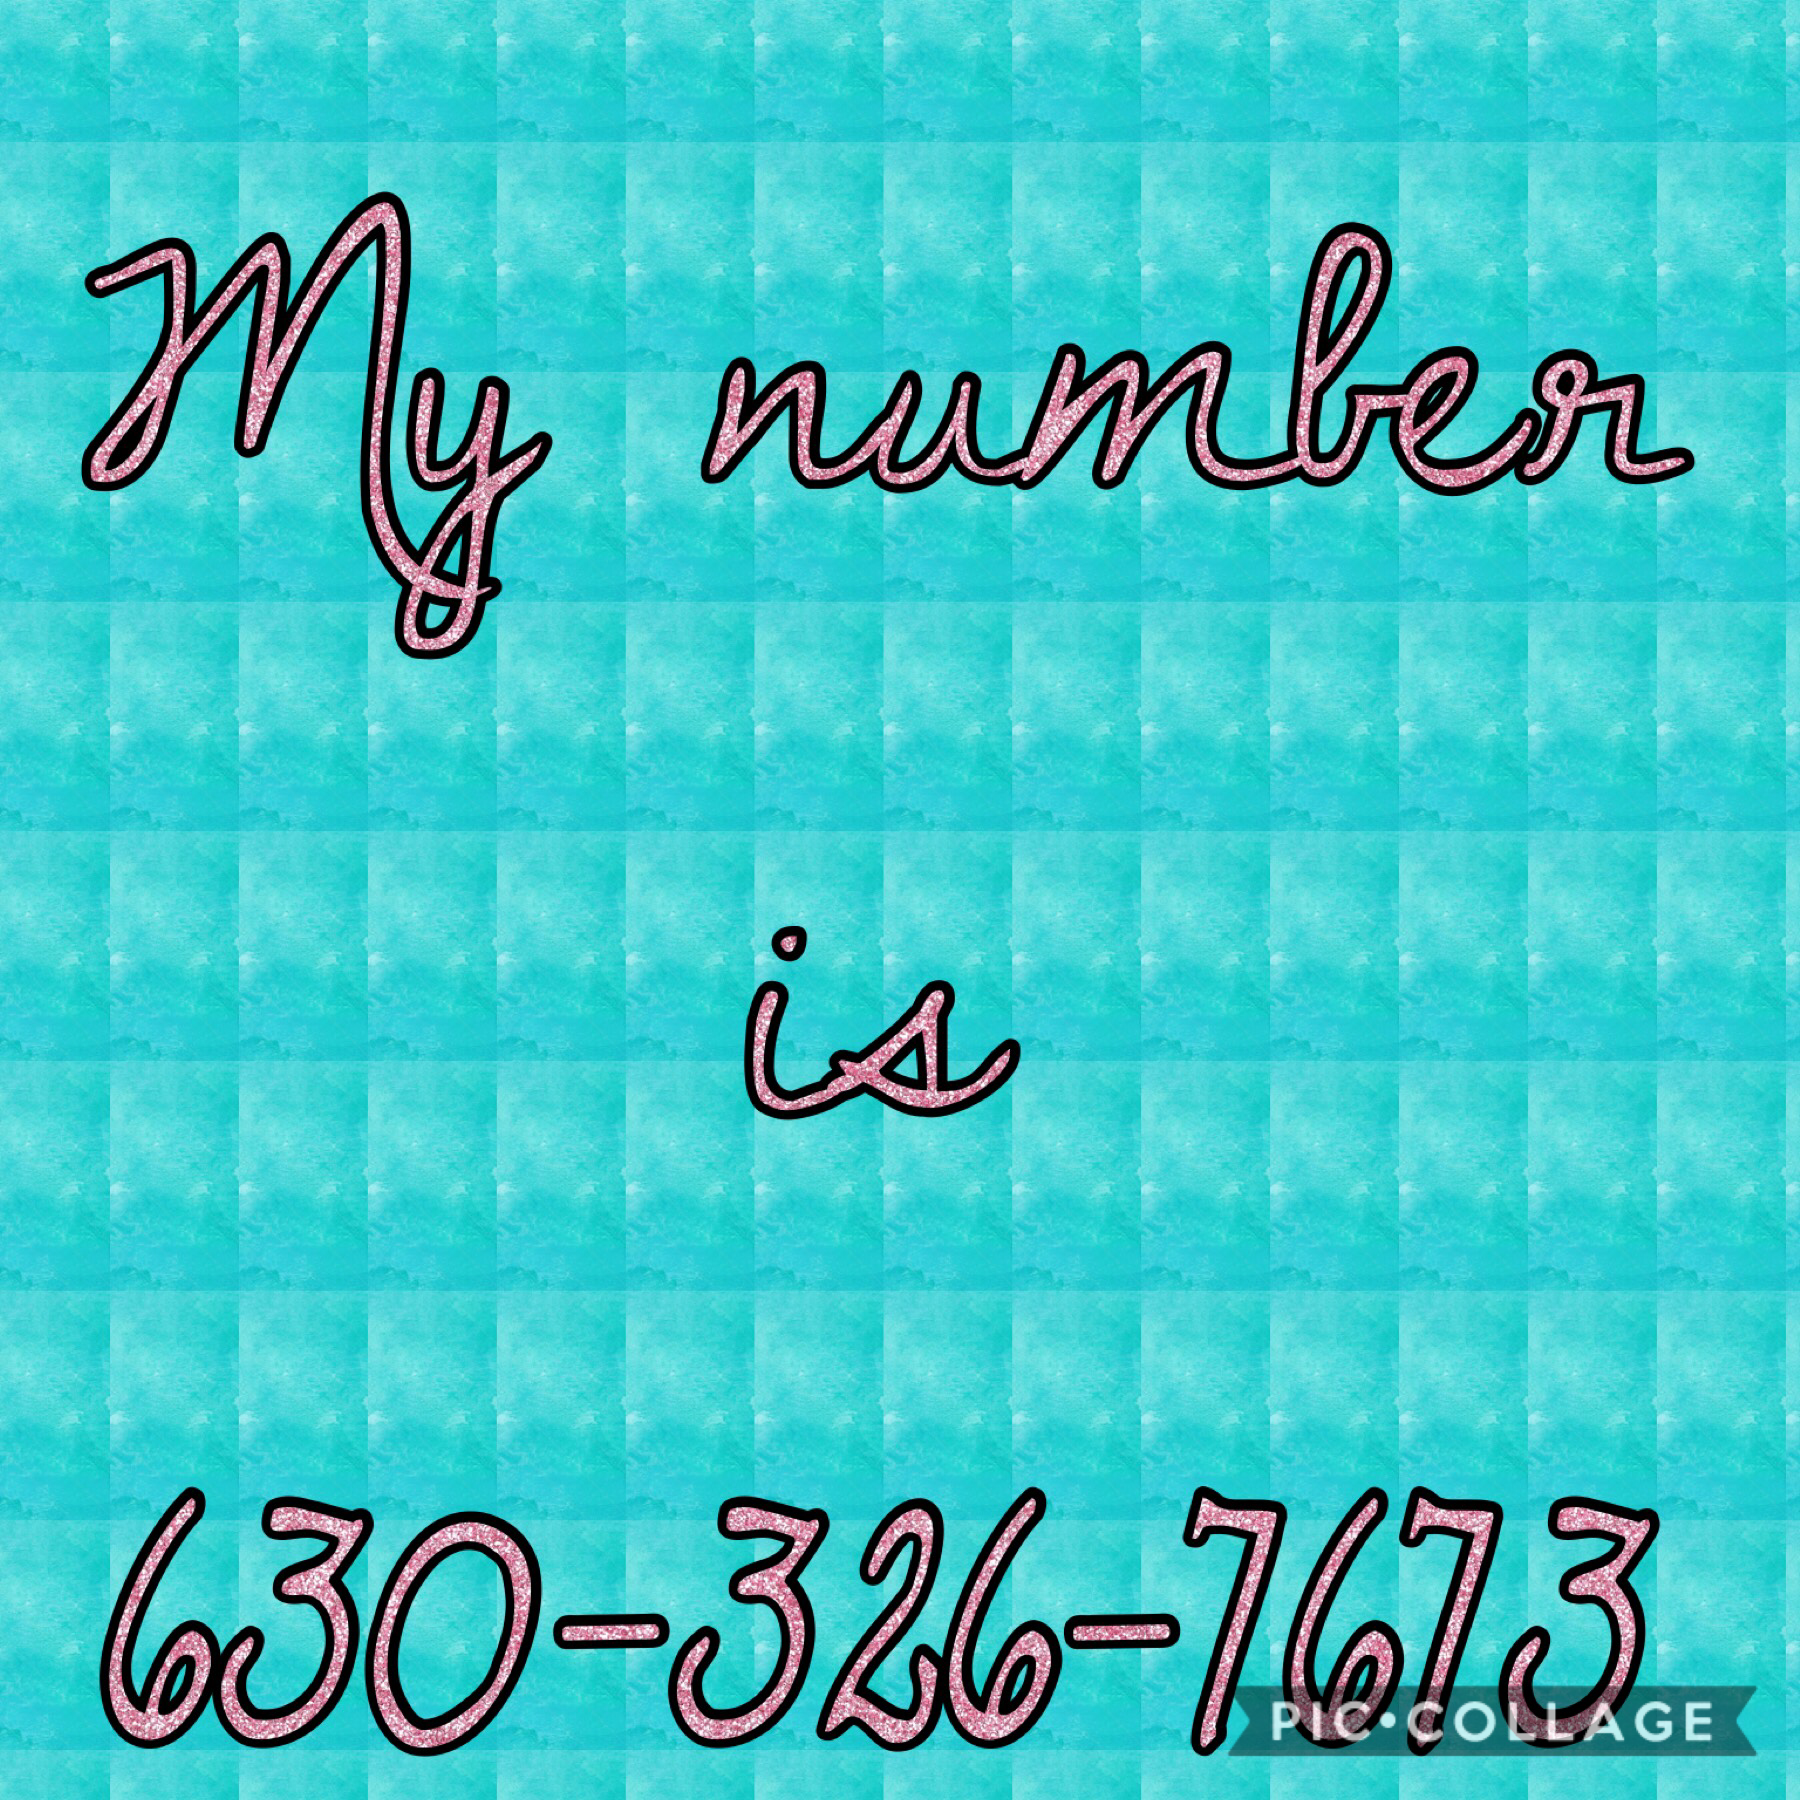 My number i